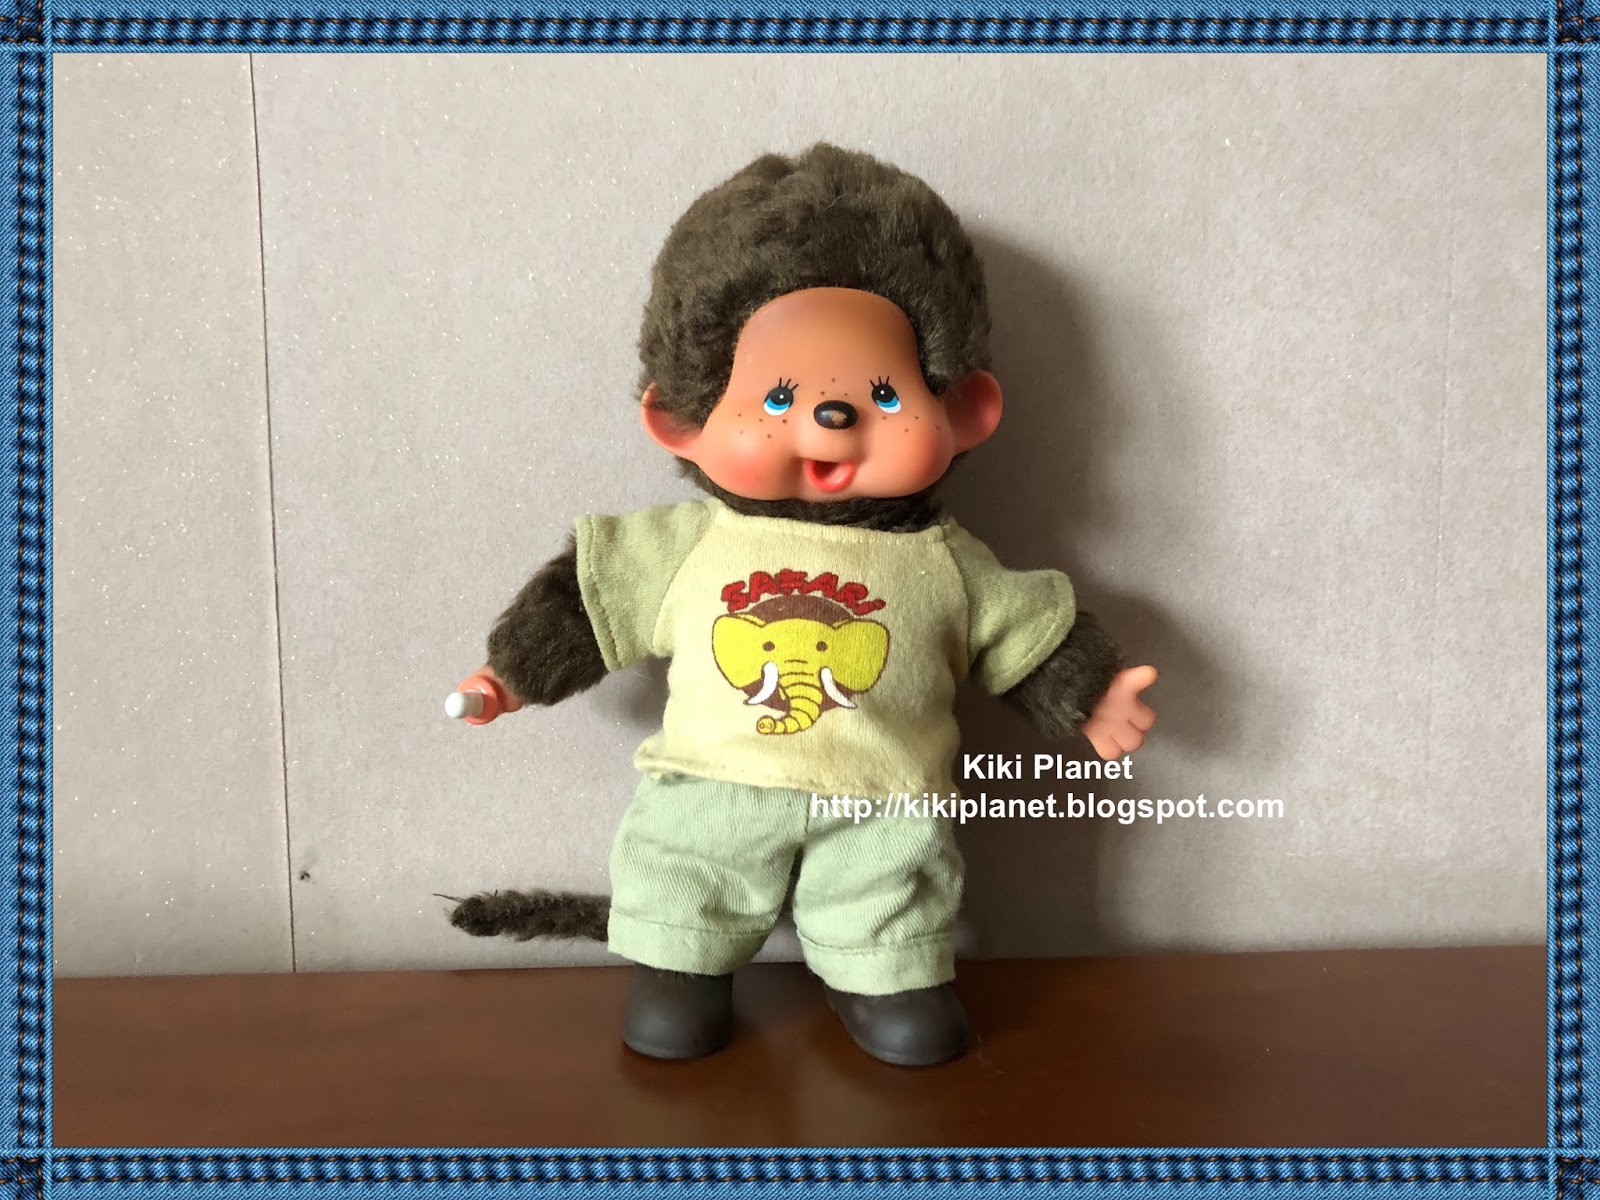 Kiki Planet: J'adore mon Kiki Safari Vintage issu du Kit Aventures !